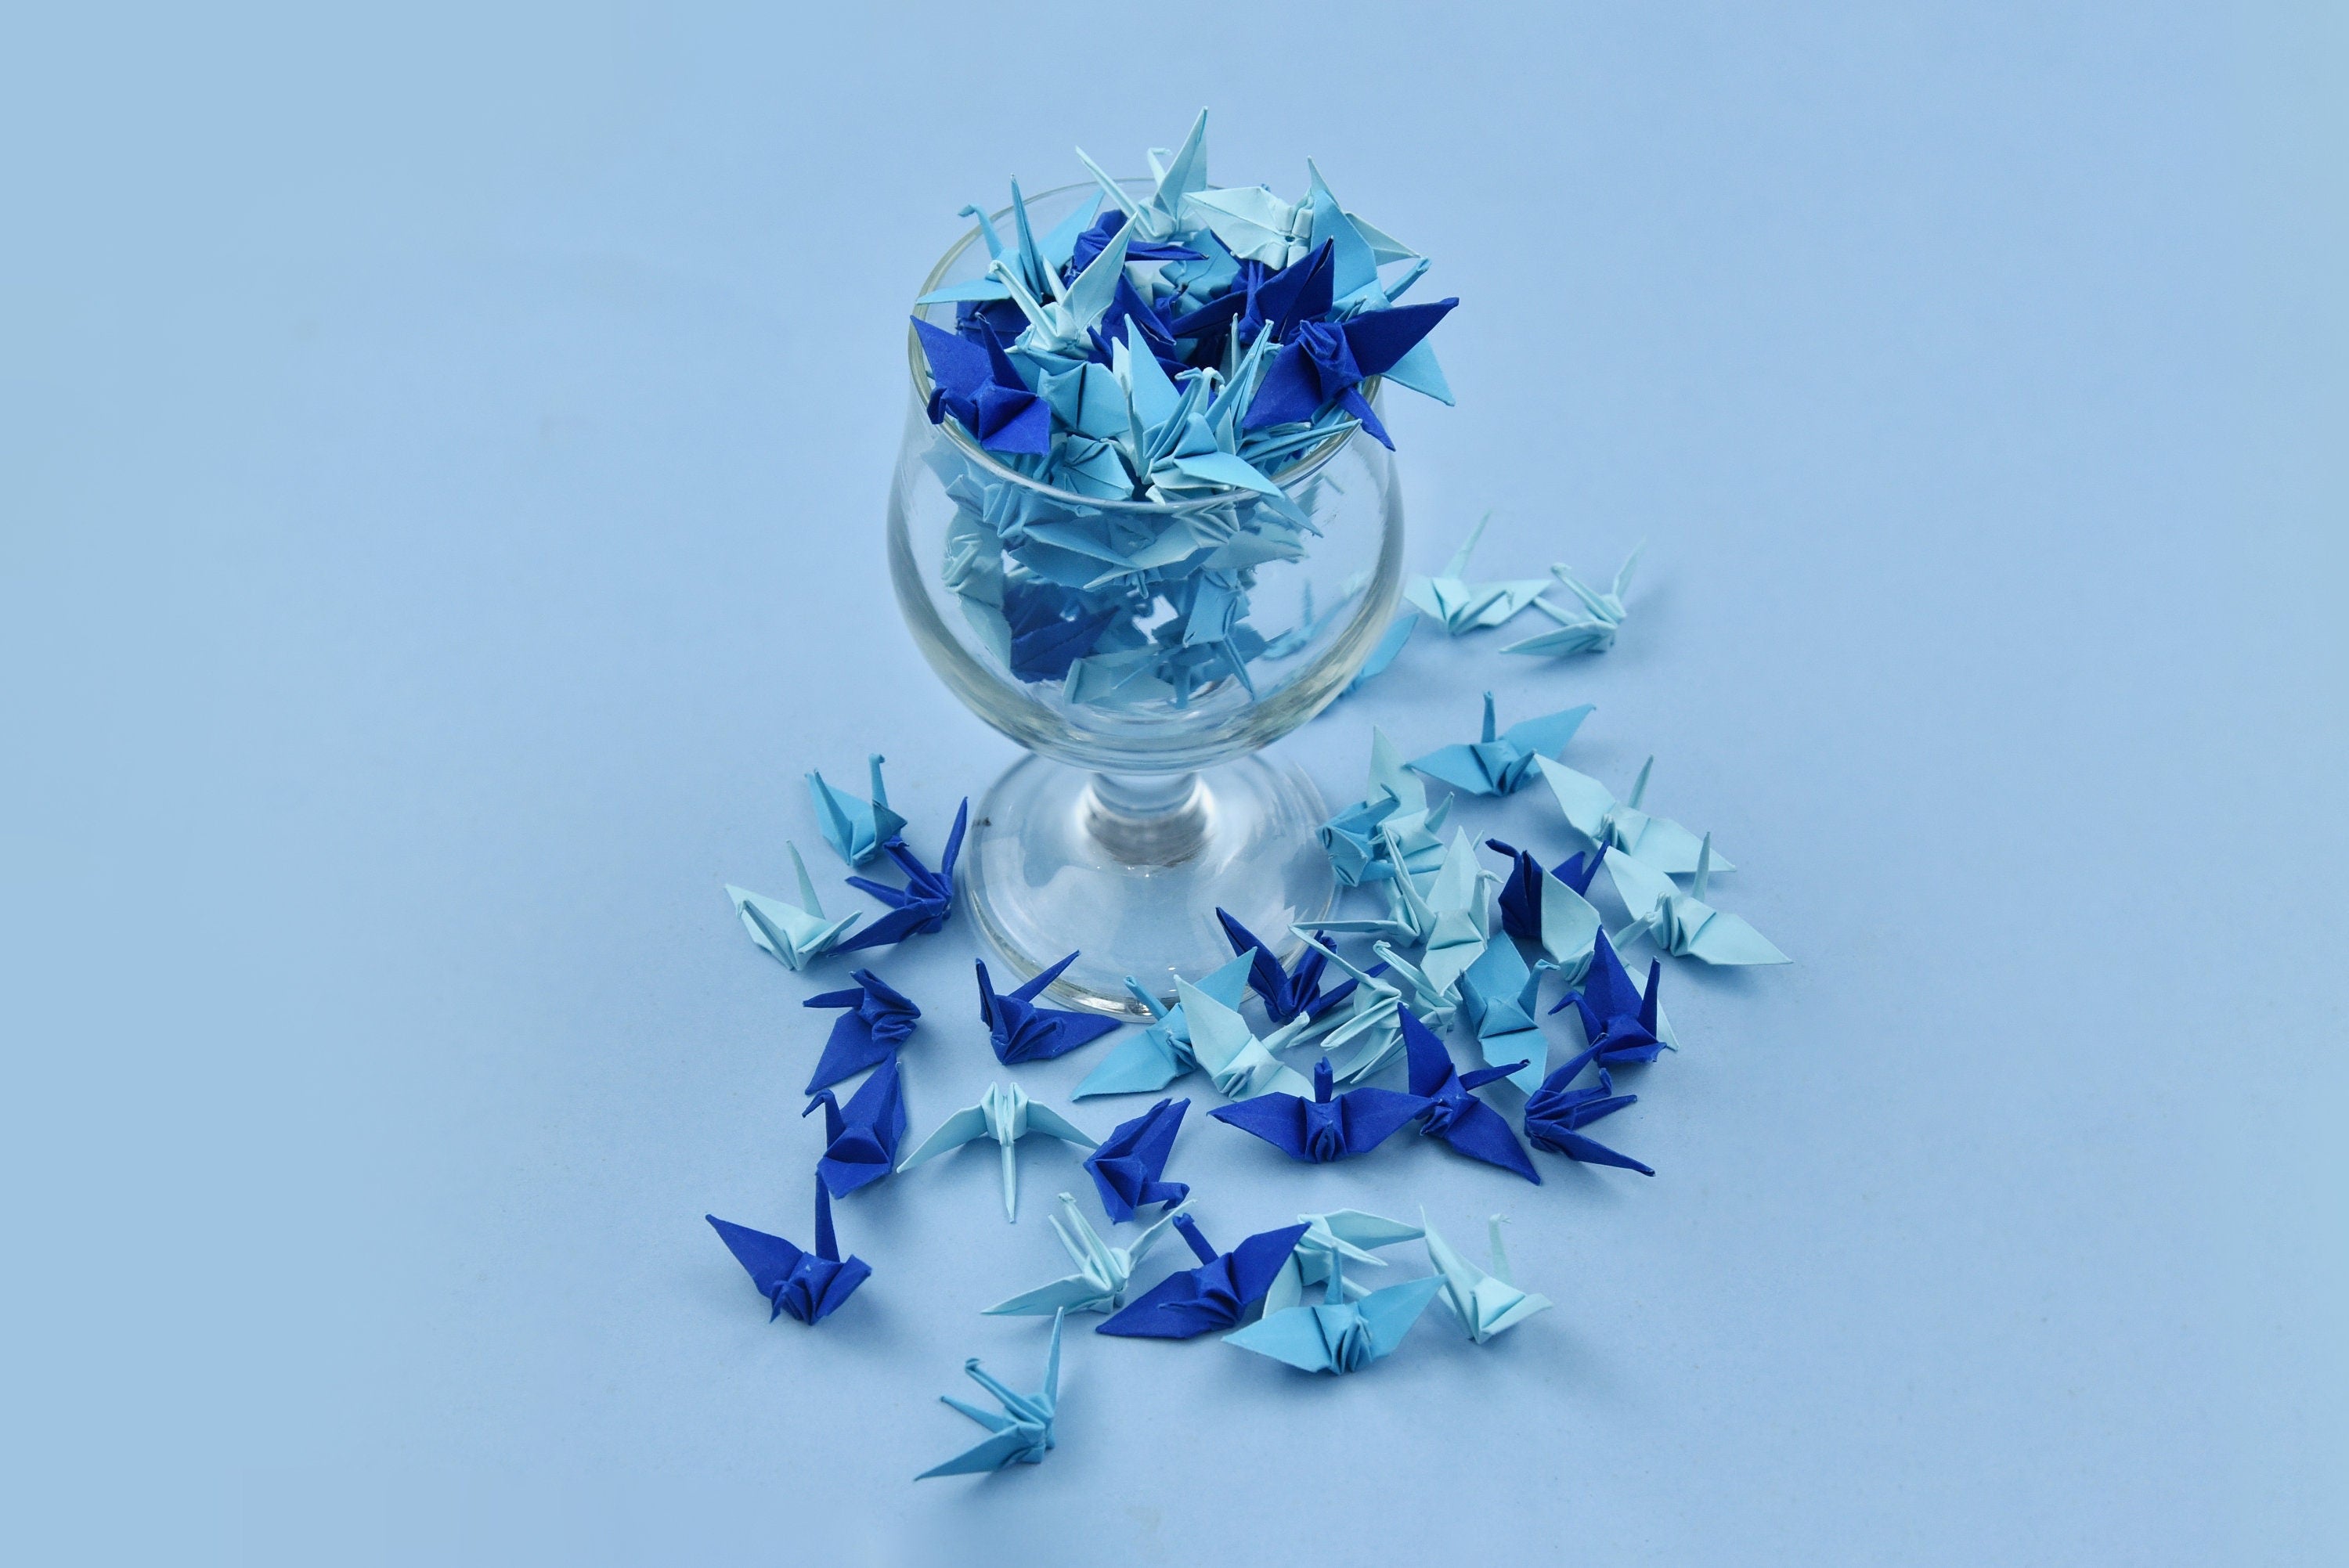 100 Grullas de papel de origami azul marino - Pequeñas de 1,5 pulgadas - Plegadas a mano para regalo de decoración de bodas